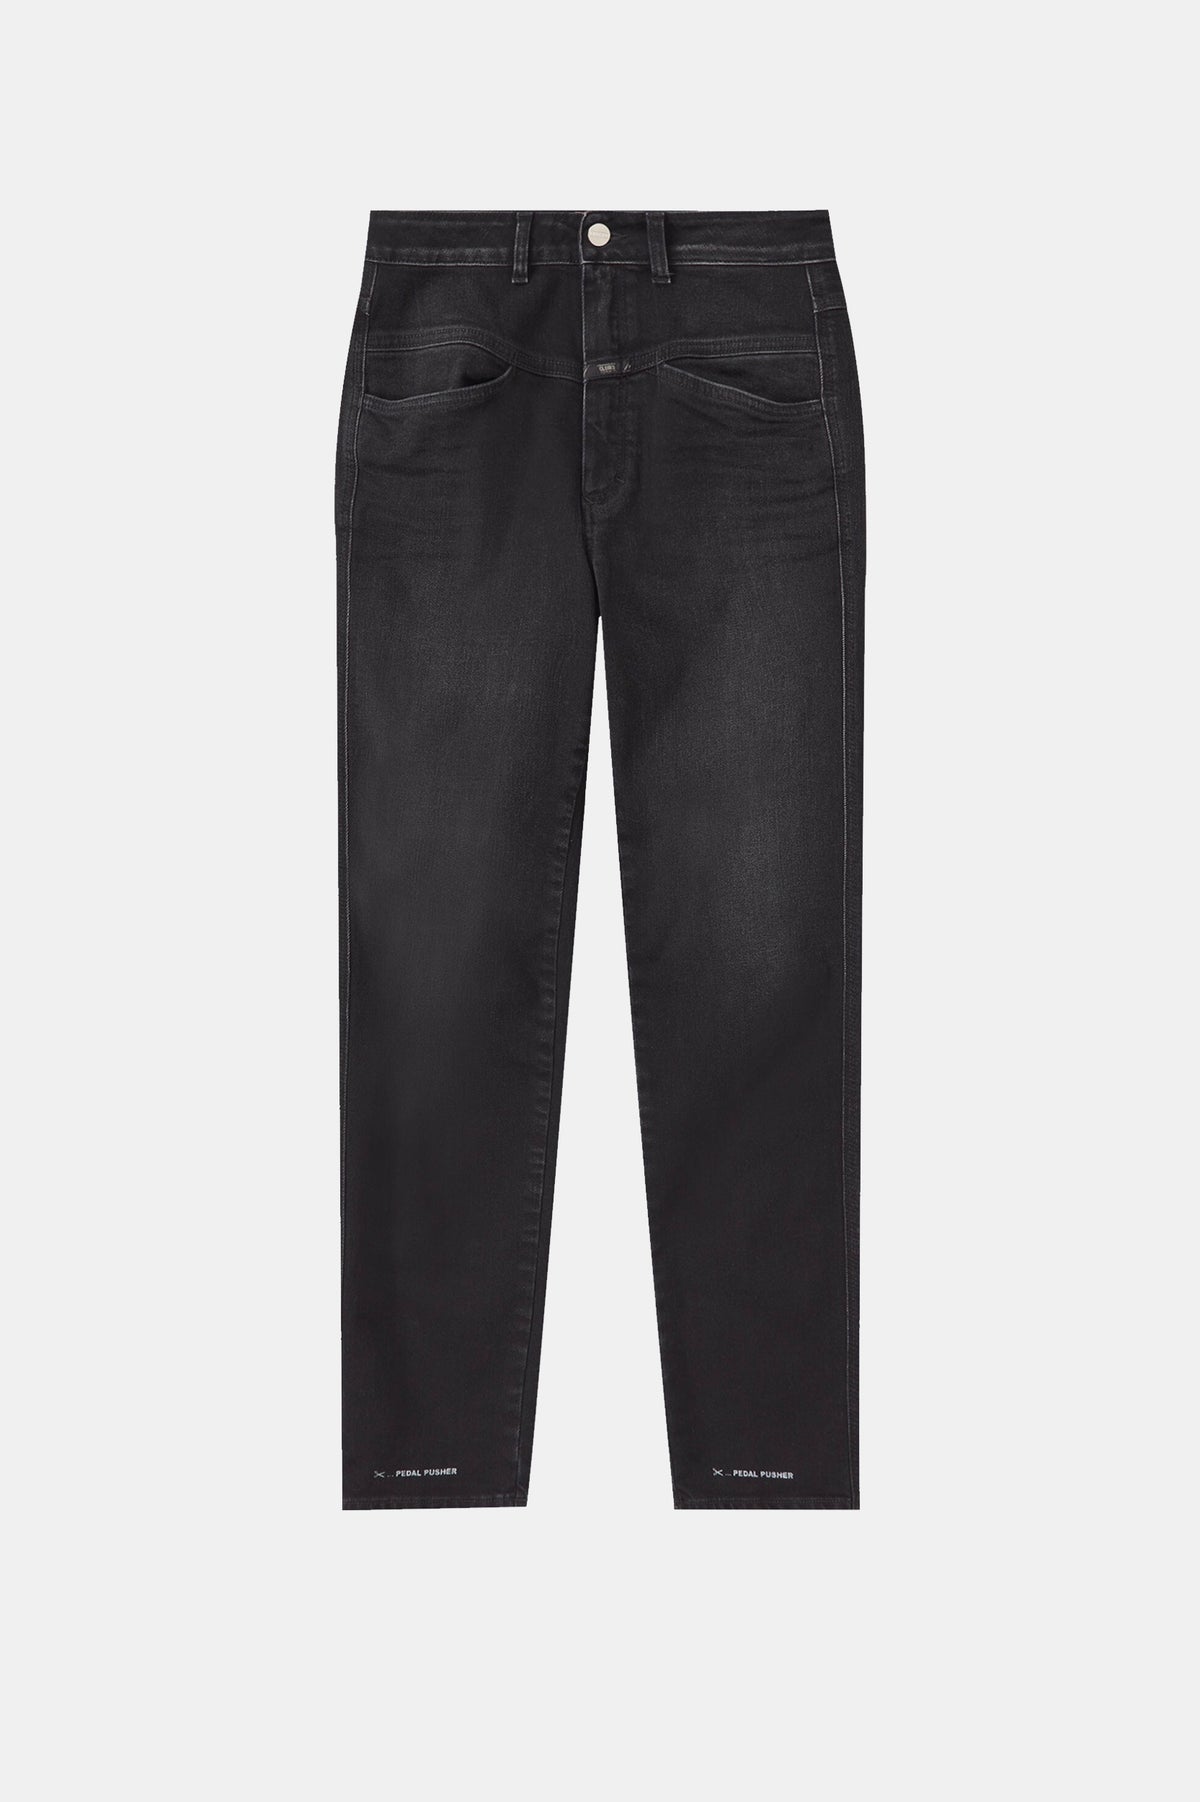 Pedal Pusher Jeans in Dark Grey